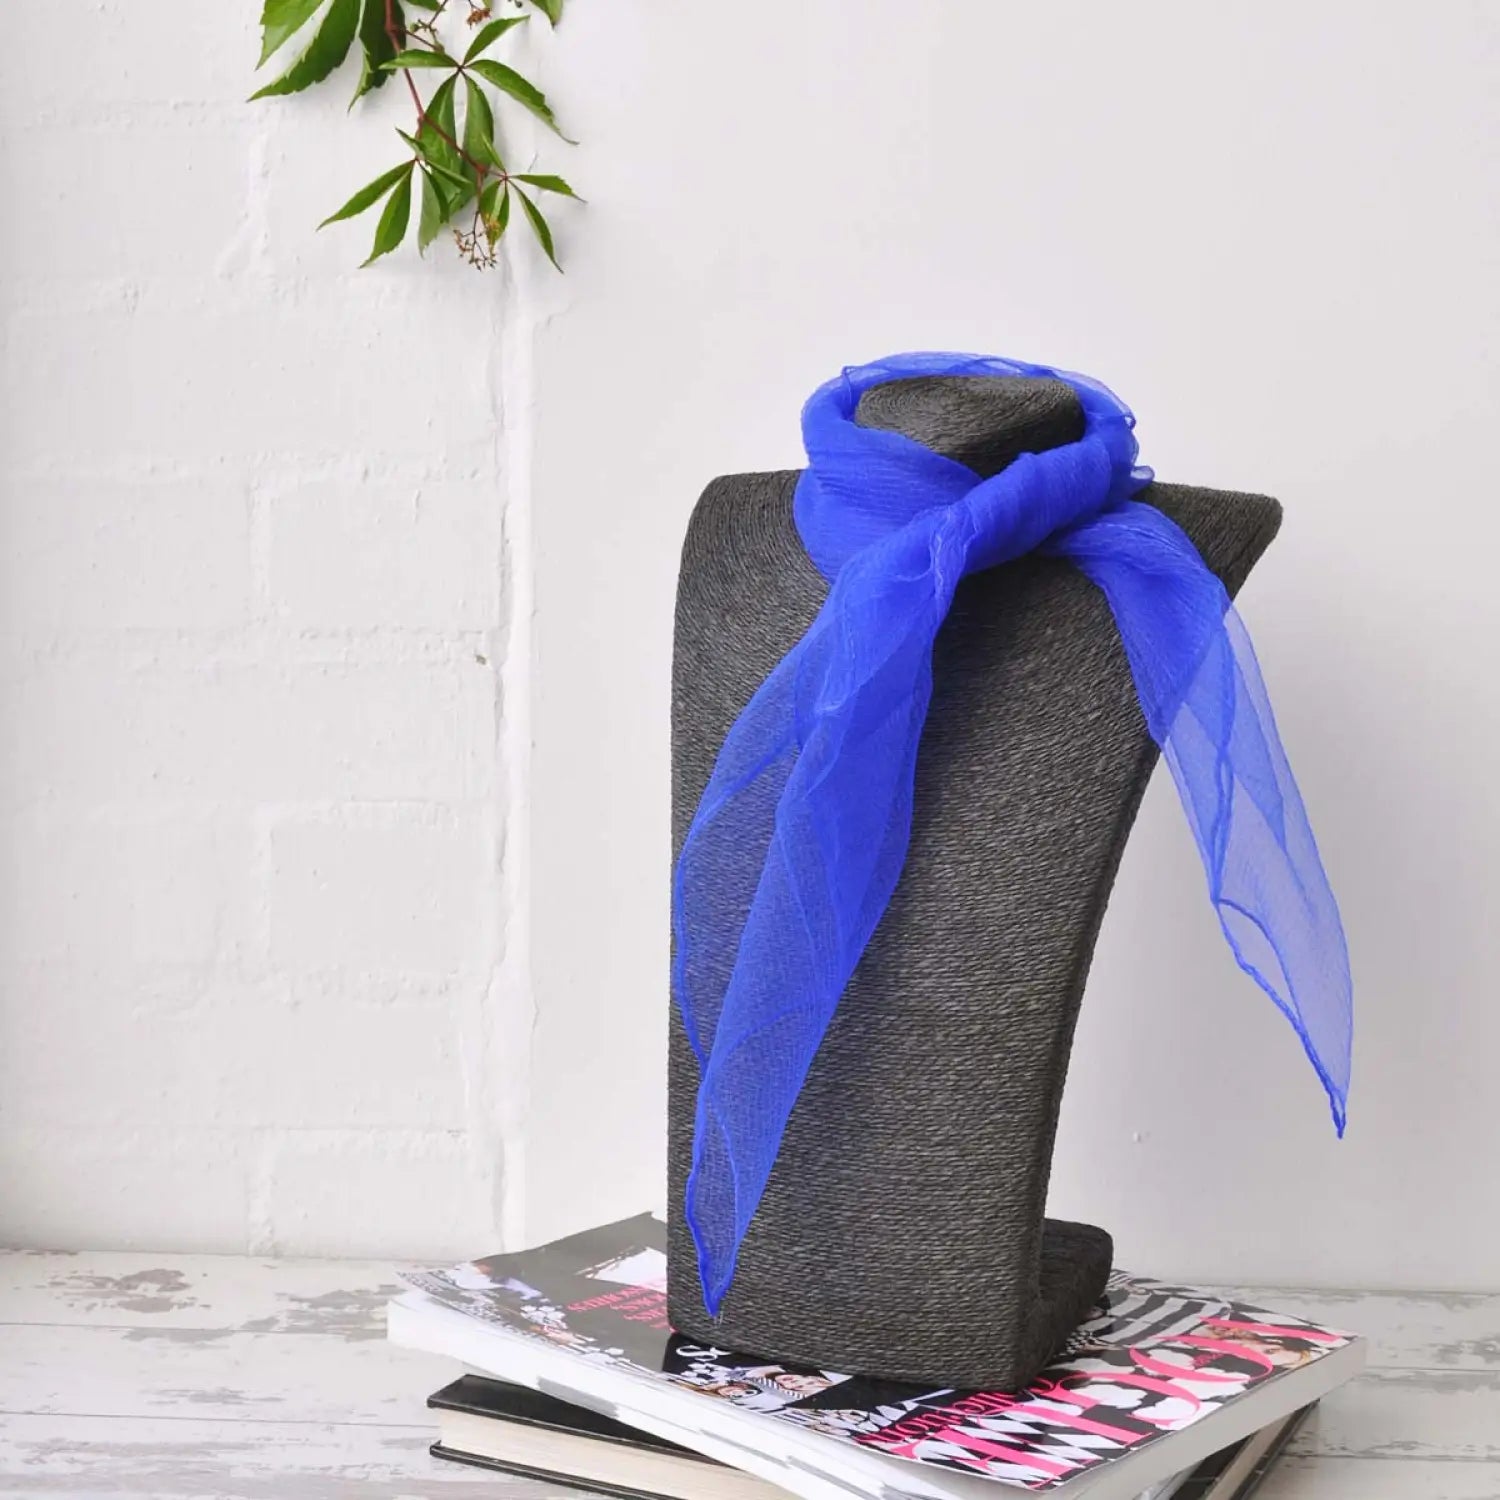 Blue chiffon square scarf tied to grey hat, retro organza style.